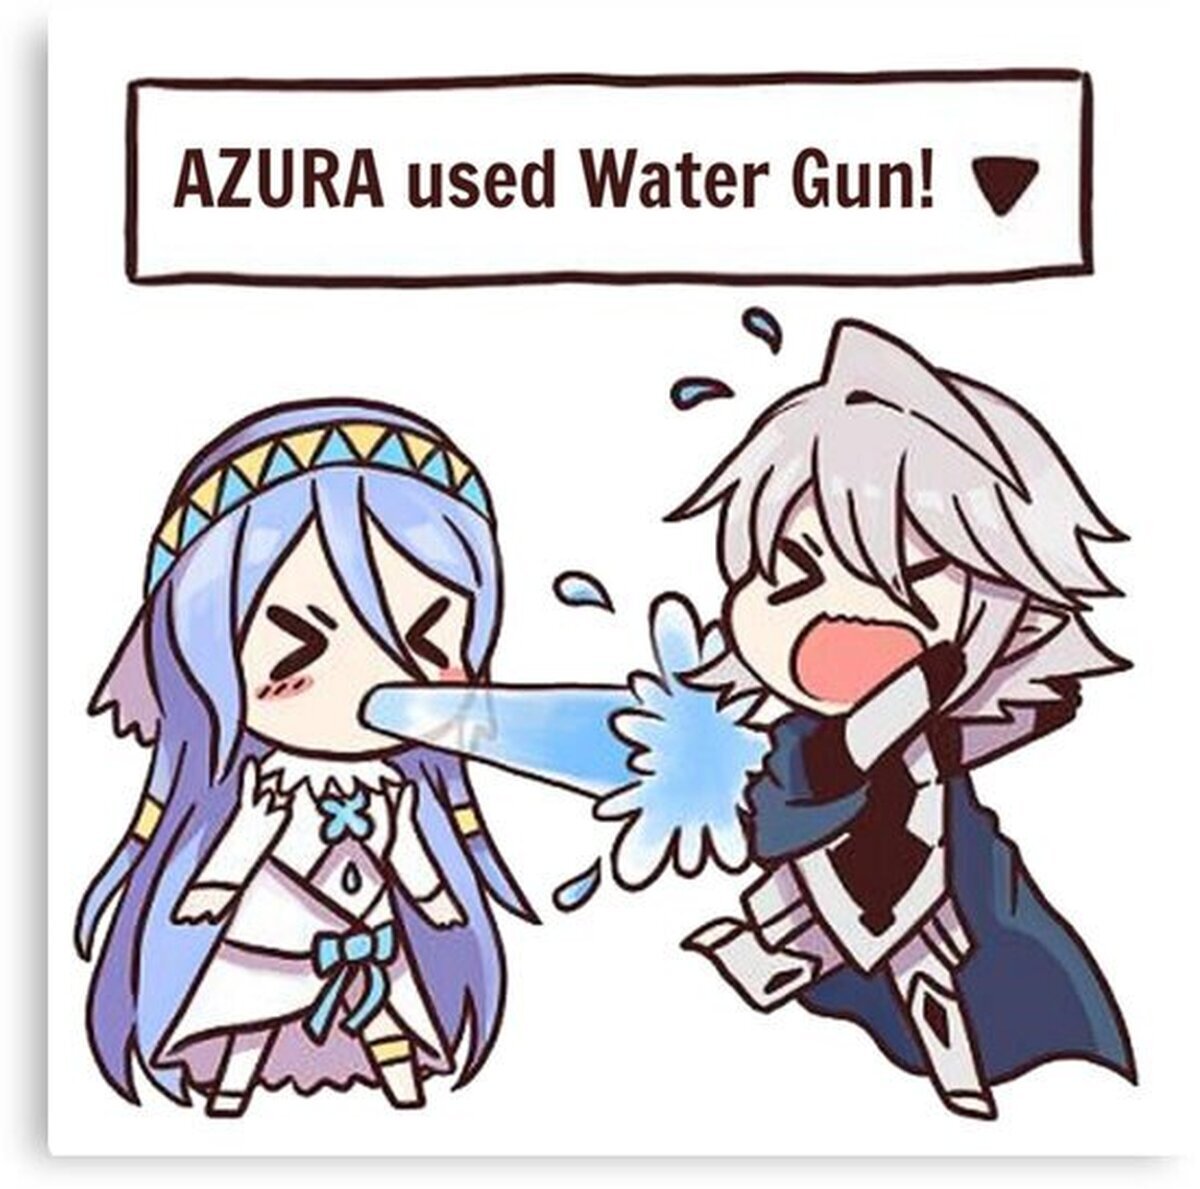 Juego equivocado, Azura